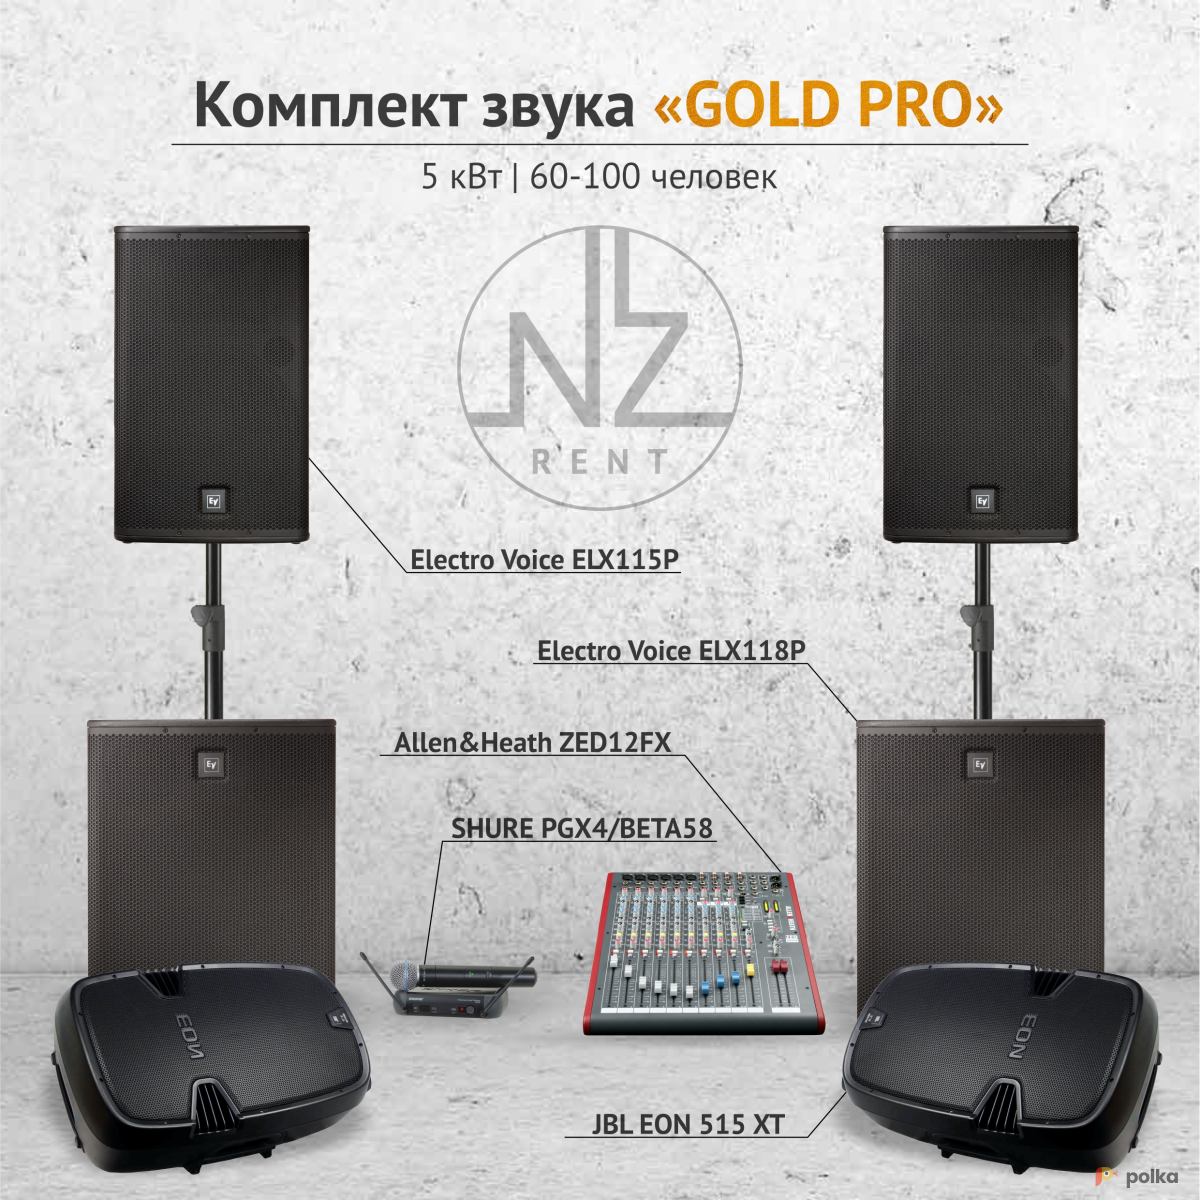 Возьмите Комплект звука "GOLD PRO" напрокат (Фото 2) в Санкт-Петербурге